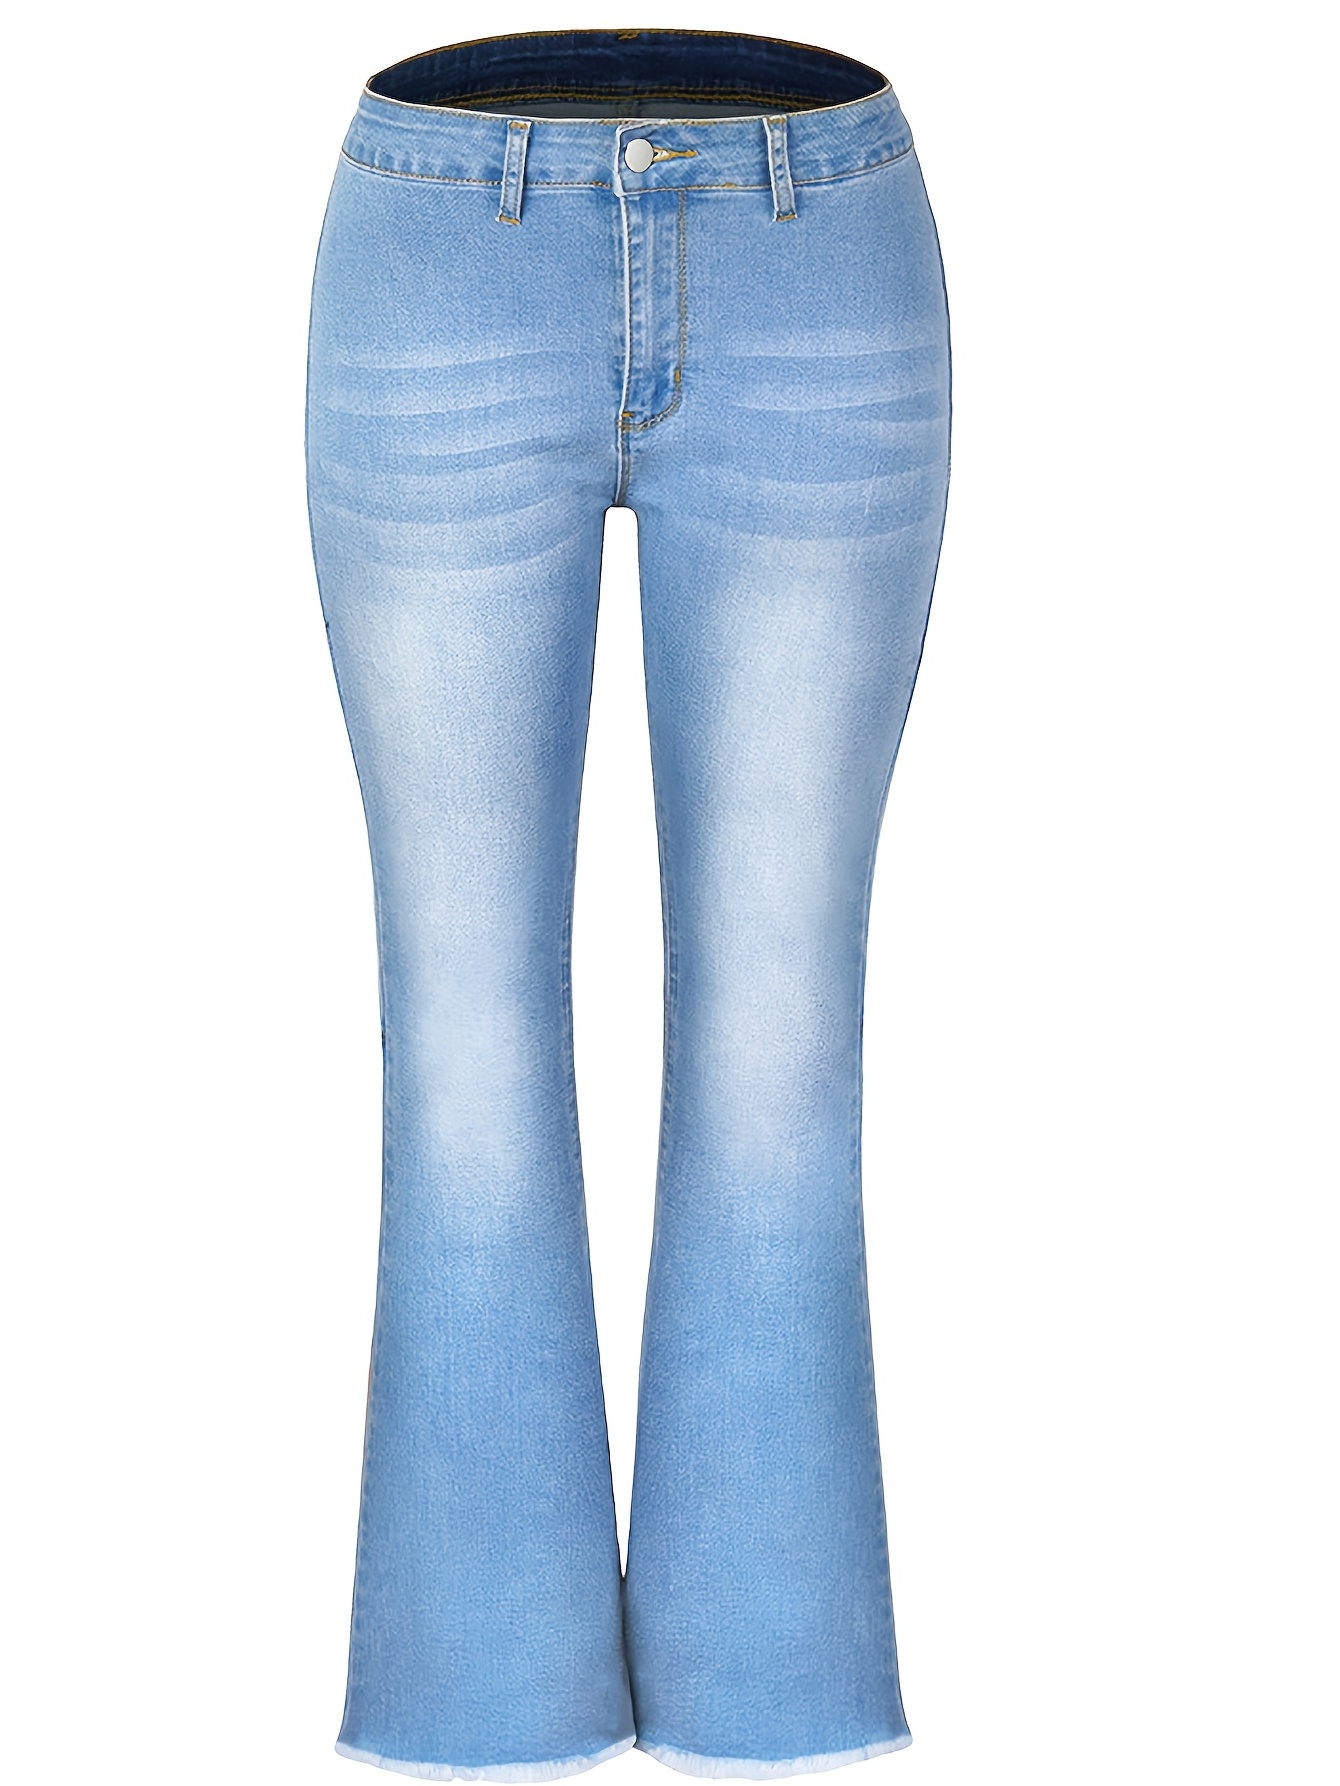 Dark Blue * Hem Flared Jeans, Bell Bottom Wide Legs High Waist Denim Pants,  Women's Denim Jeans & Clothing